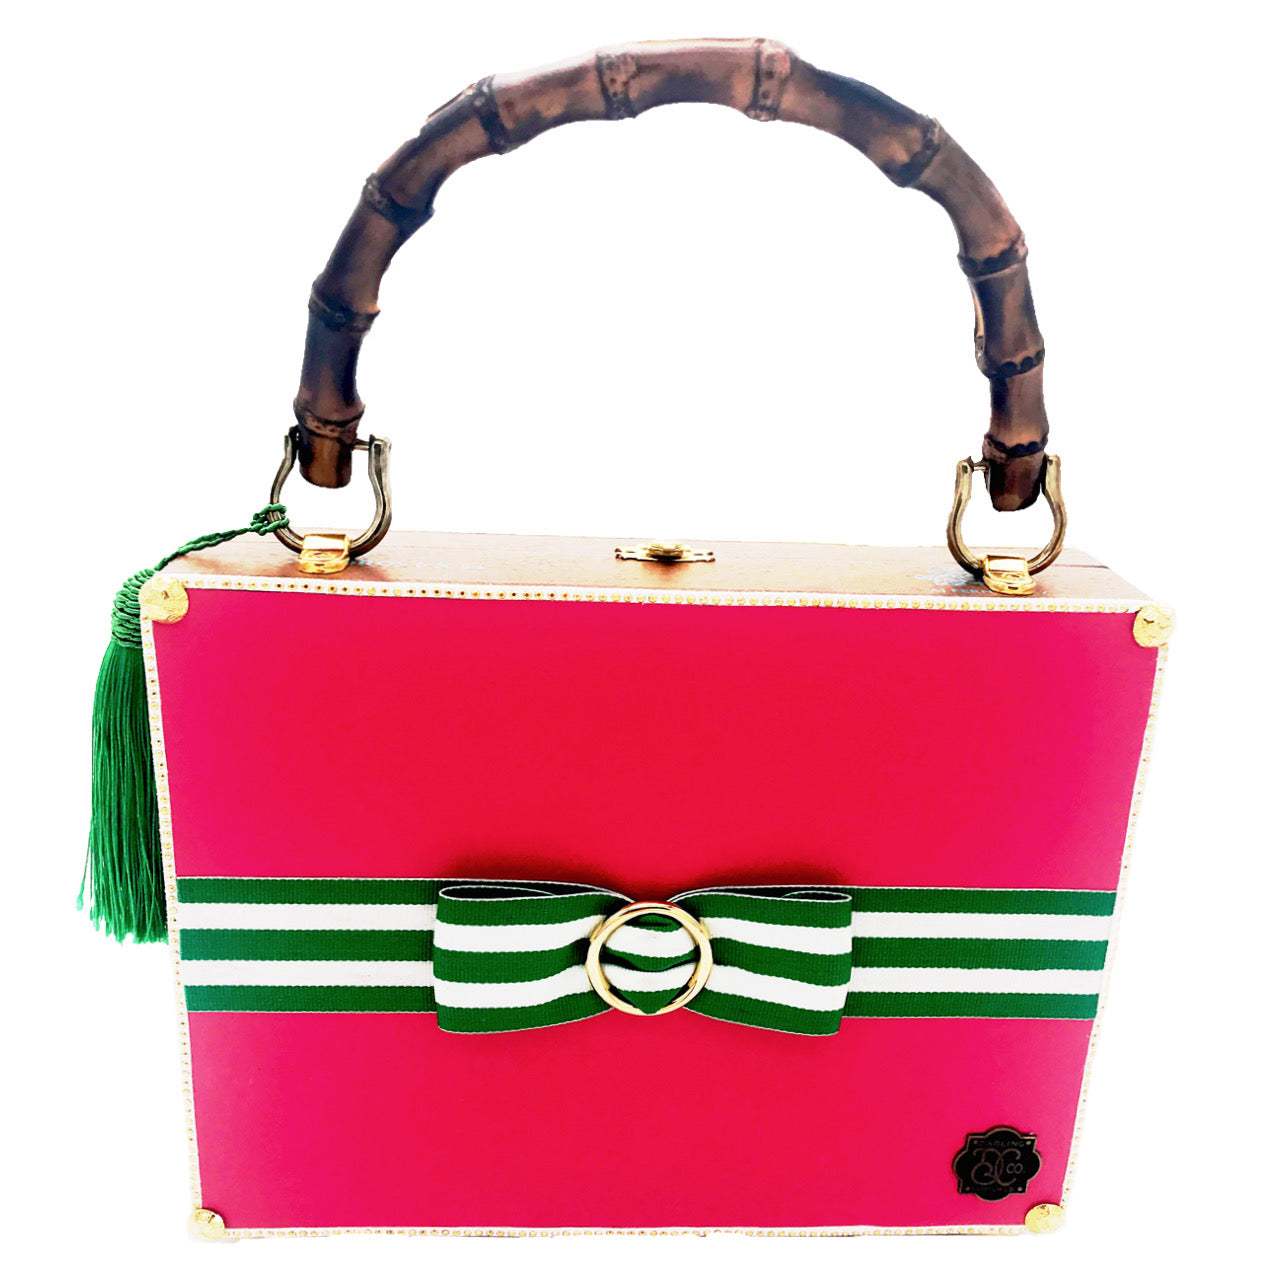 Are Zara handbags good? - Quora